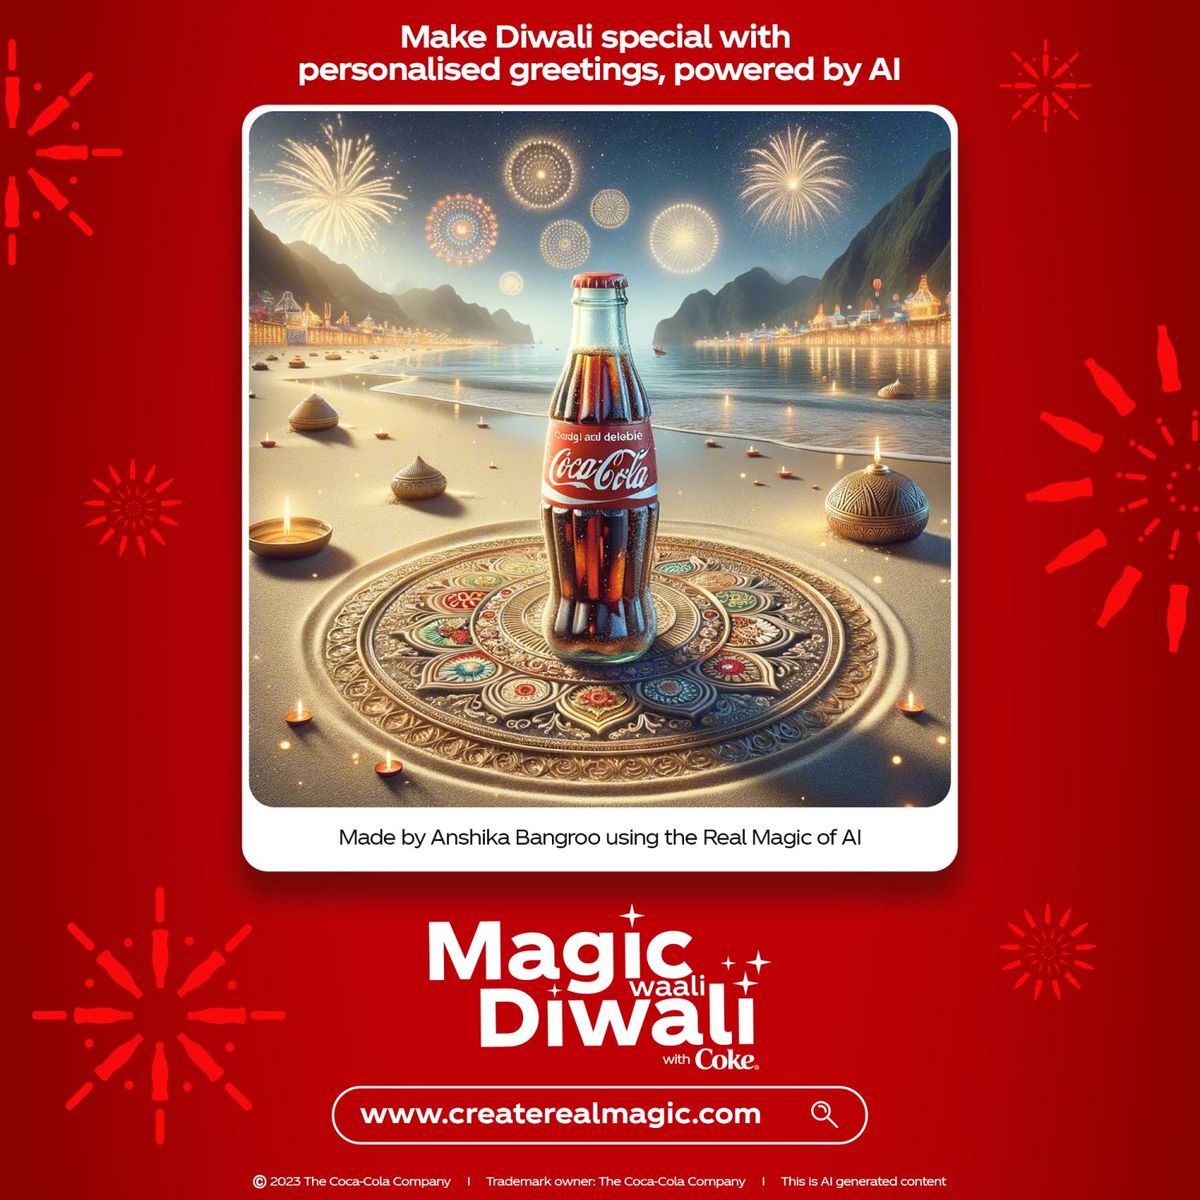 Coca-Cola Ignites Diwali Celebrations with Unique Personalized AI – Generated Wish Cards